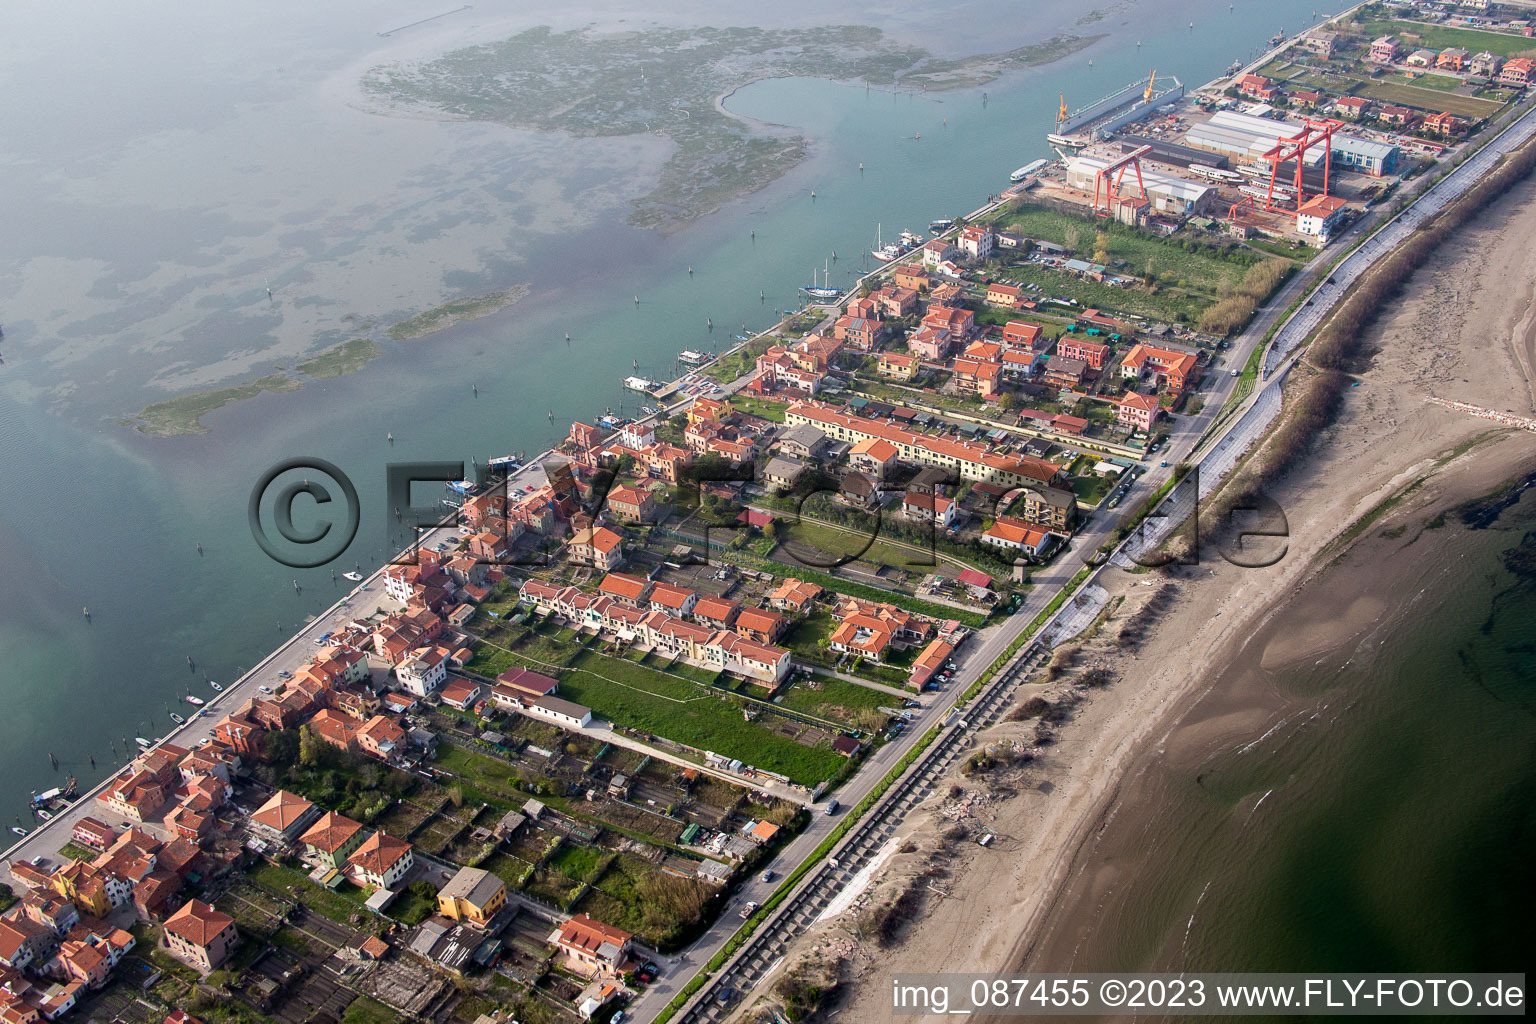 Luftbild von Sant'Antonio im Bundesland Venetien, Italien